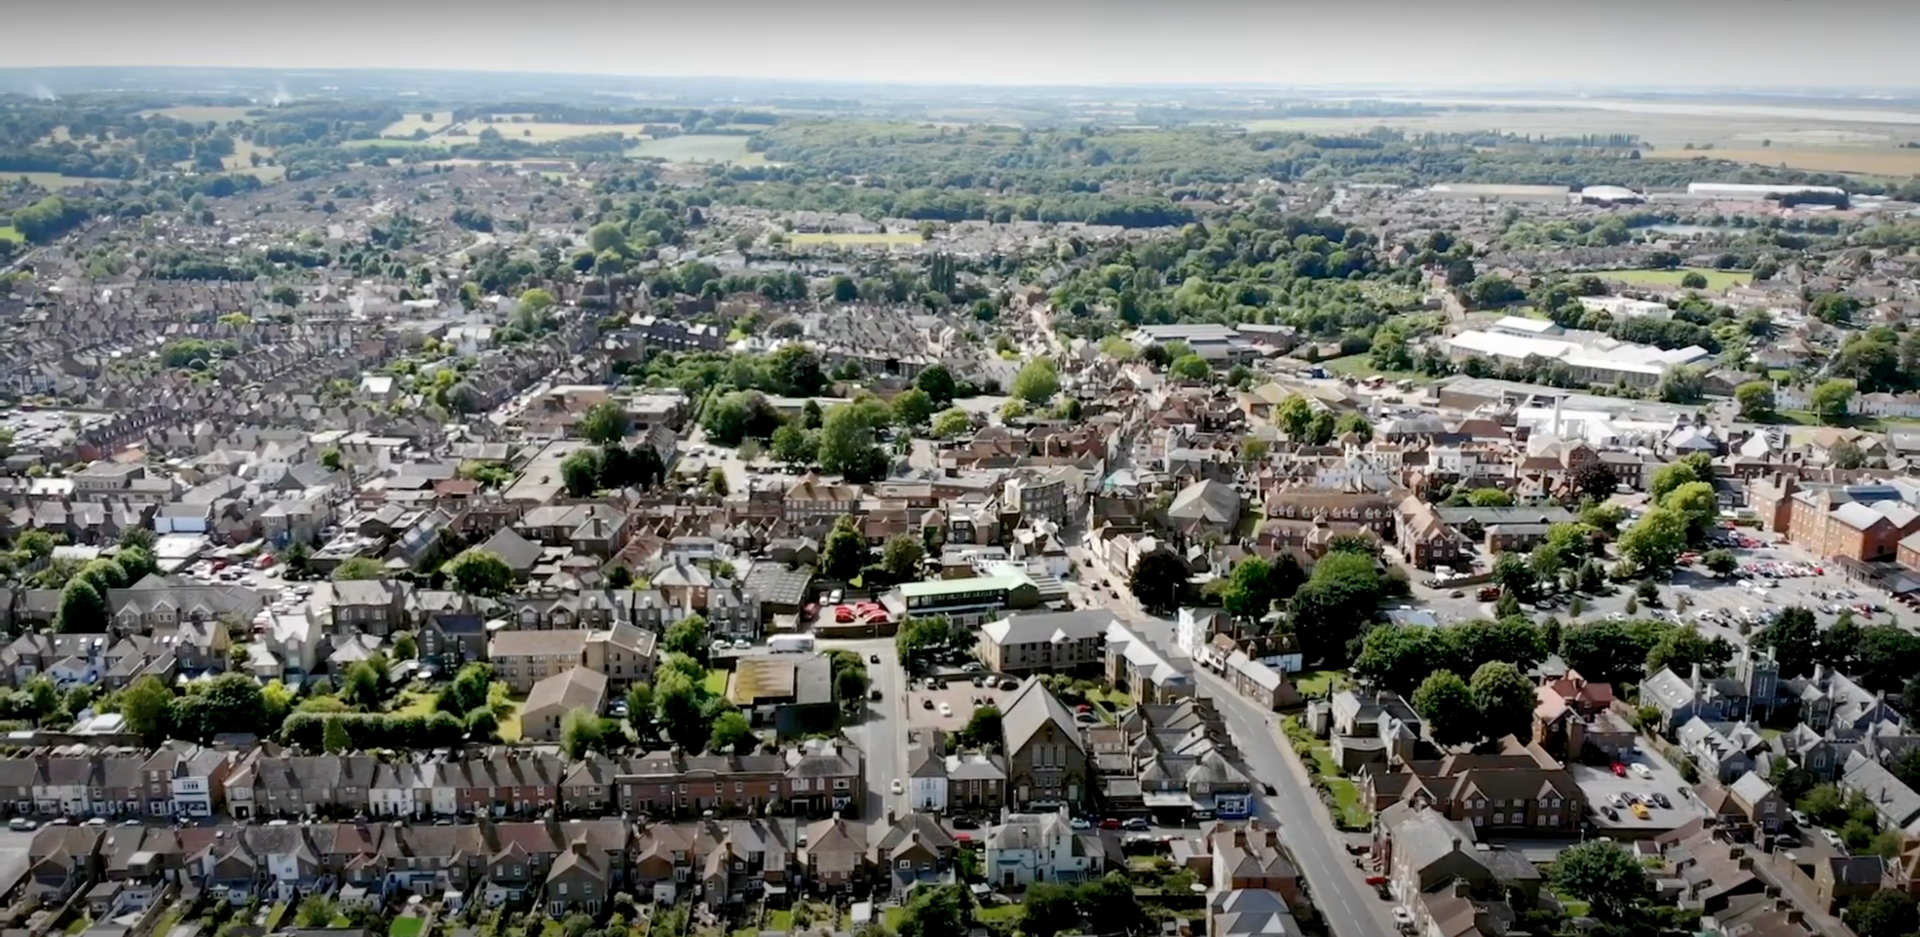 Drone footage of Faversham